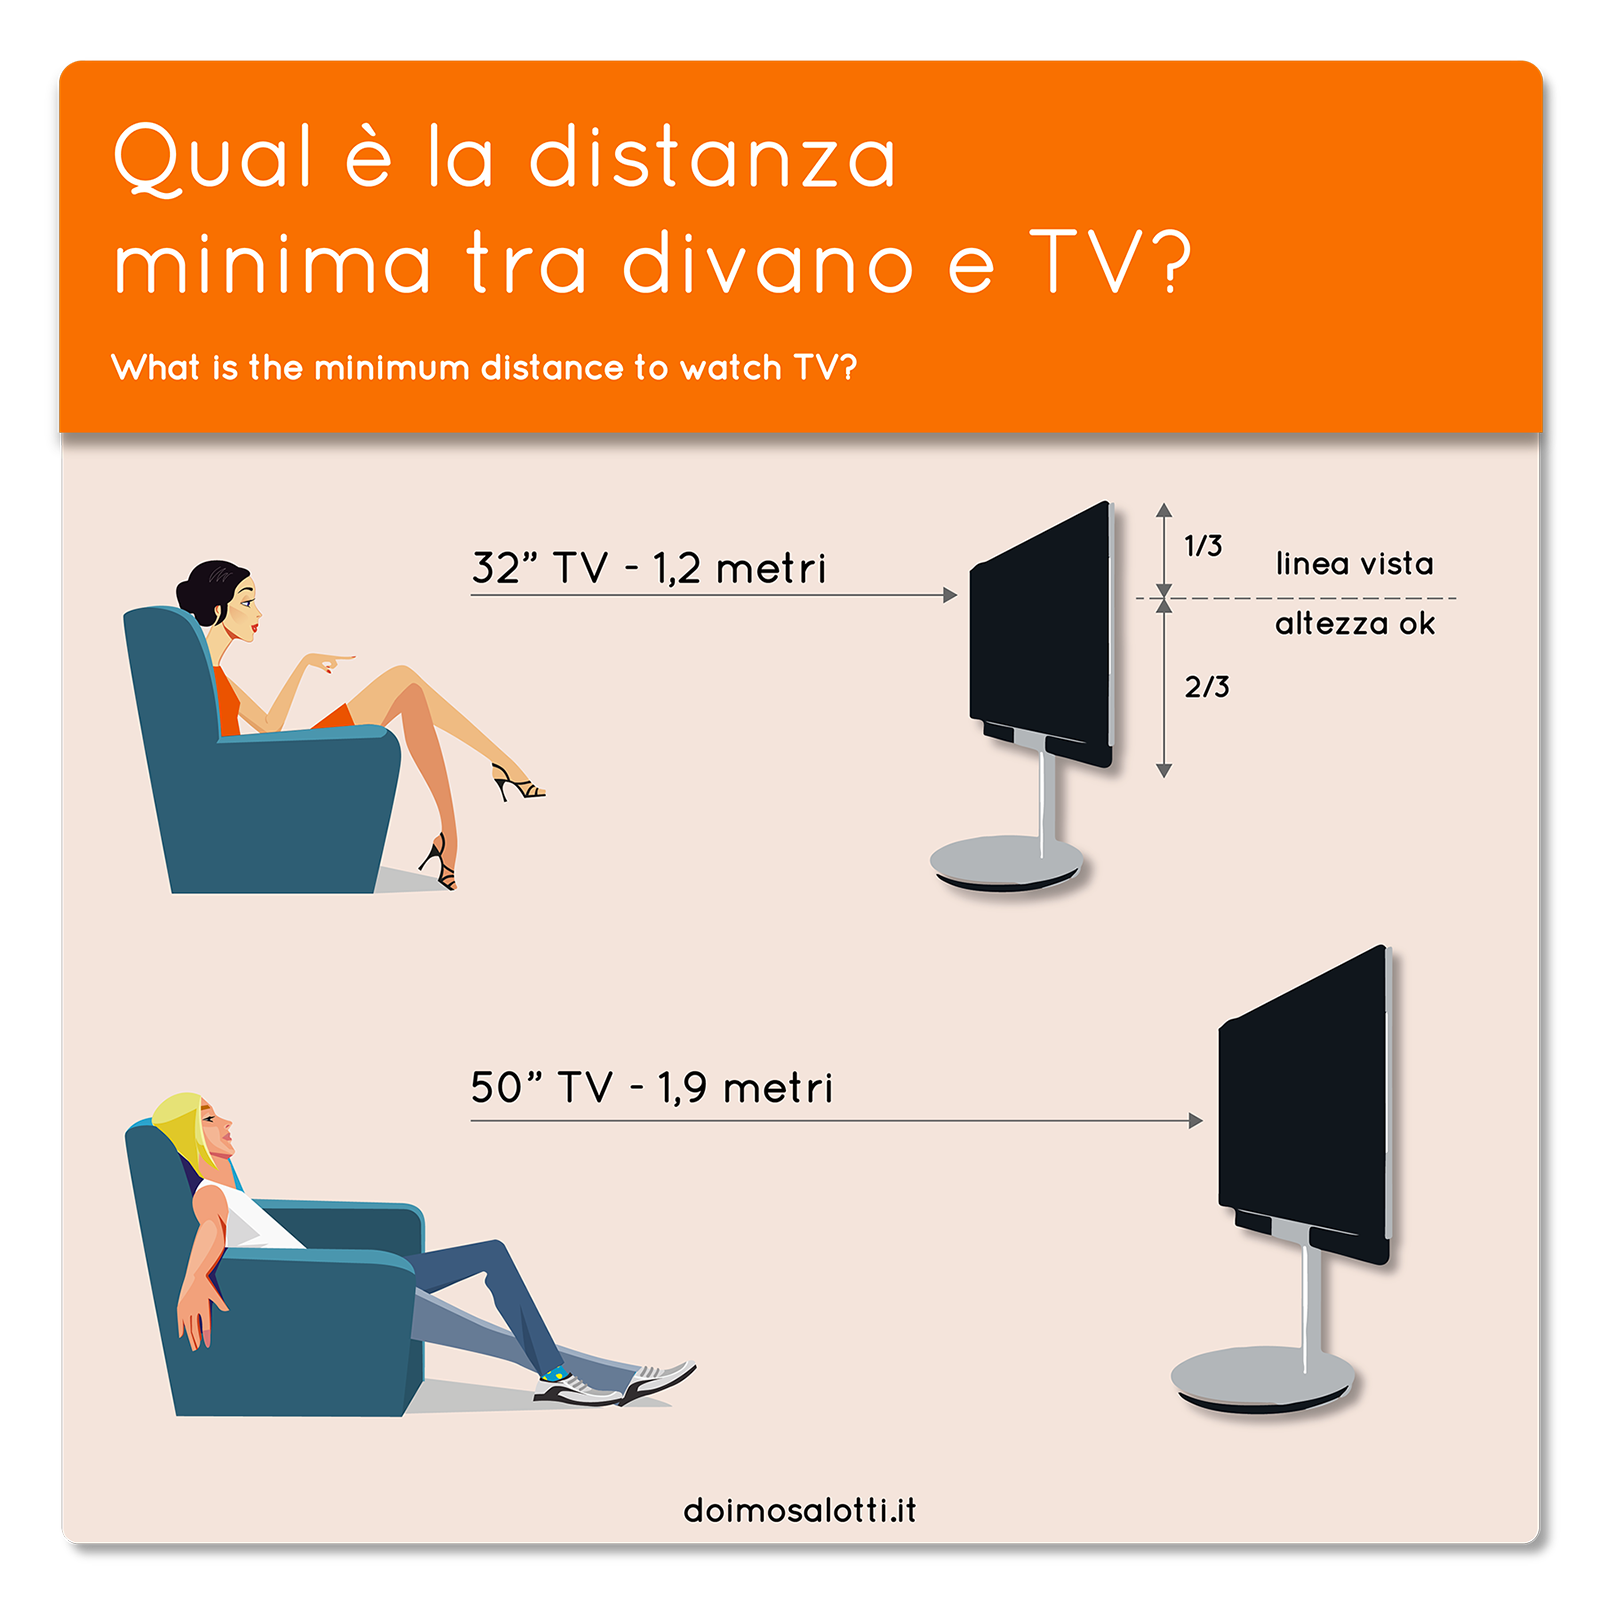 Размер от телевизора до дивана. Высота телевизора. Расстояние для просмотра телевизора. Размер от дивана до ТВ.